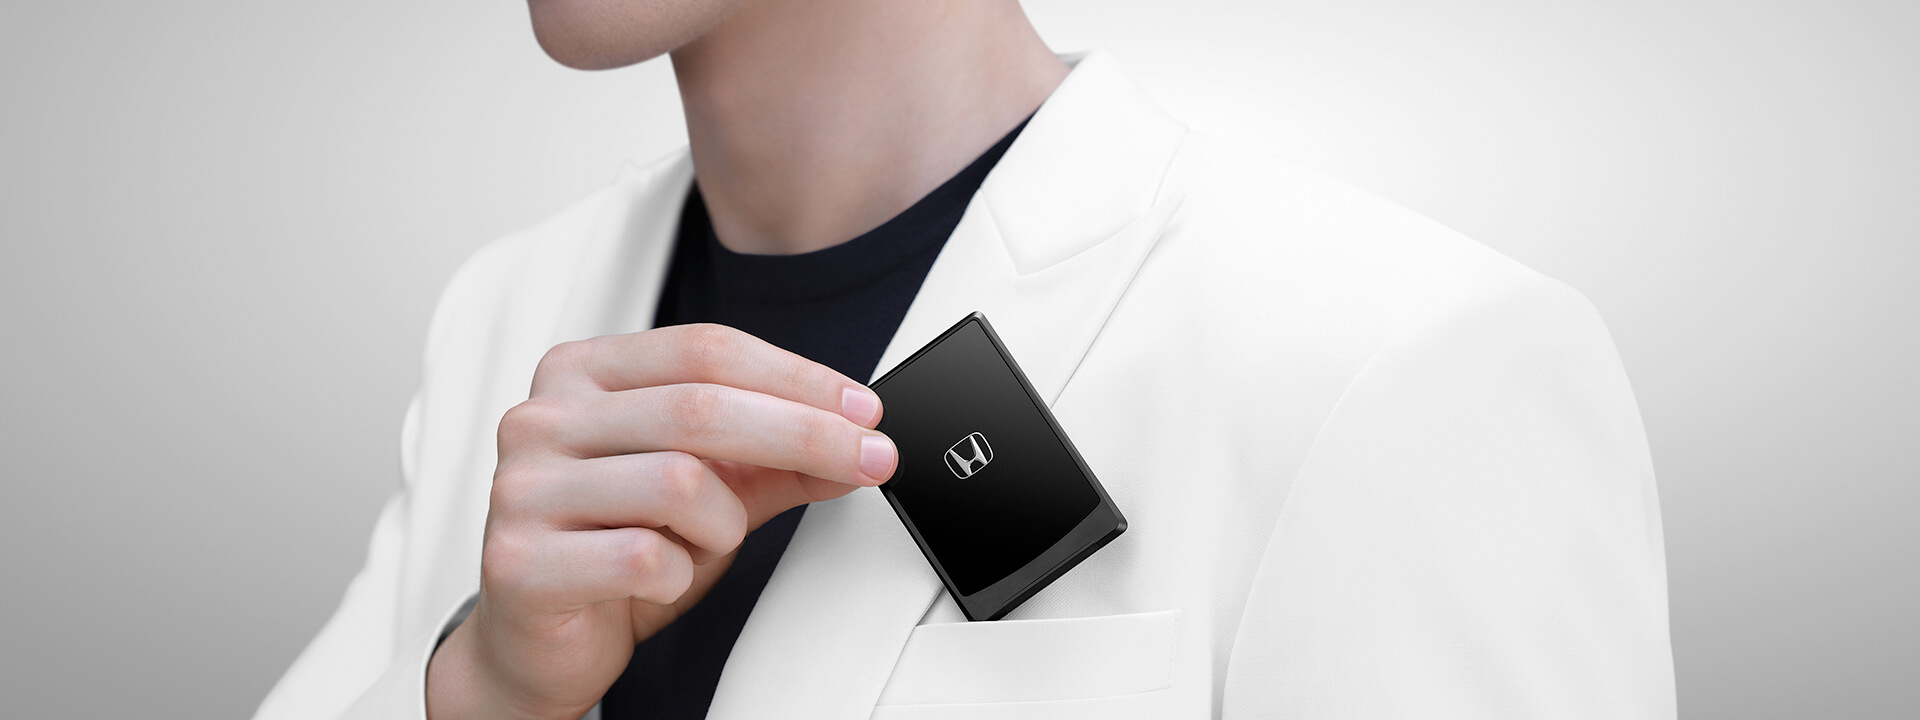 Honda Smart Key Card ระบบควบคุมประตูแบบอัจฉริยะพร้อม Honda Smart Key Card ใหม่ ดีไซน์เรียบหรู พกพาสะดวก ให้คุณล็อกและปลดล็อกรถได้อย่างสะดวกสบาย เพียงแค่พกการ์ดไว้กับตัว